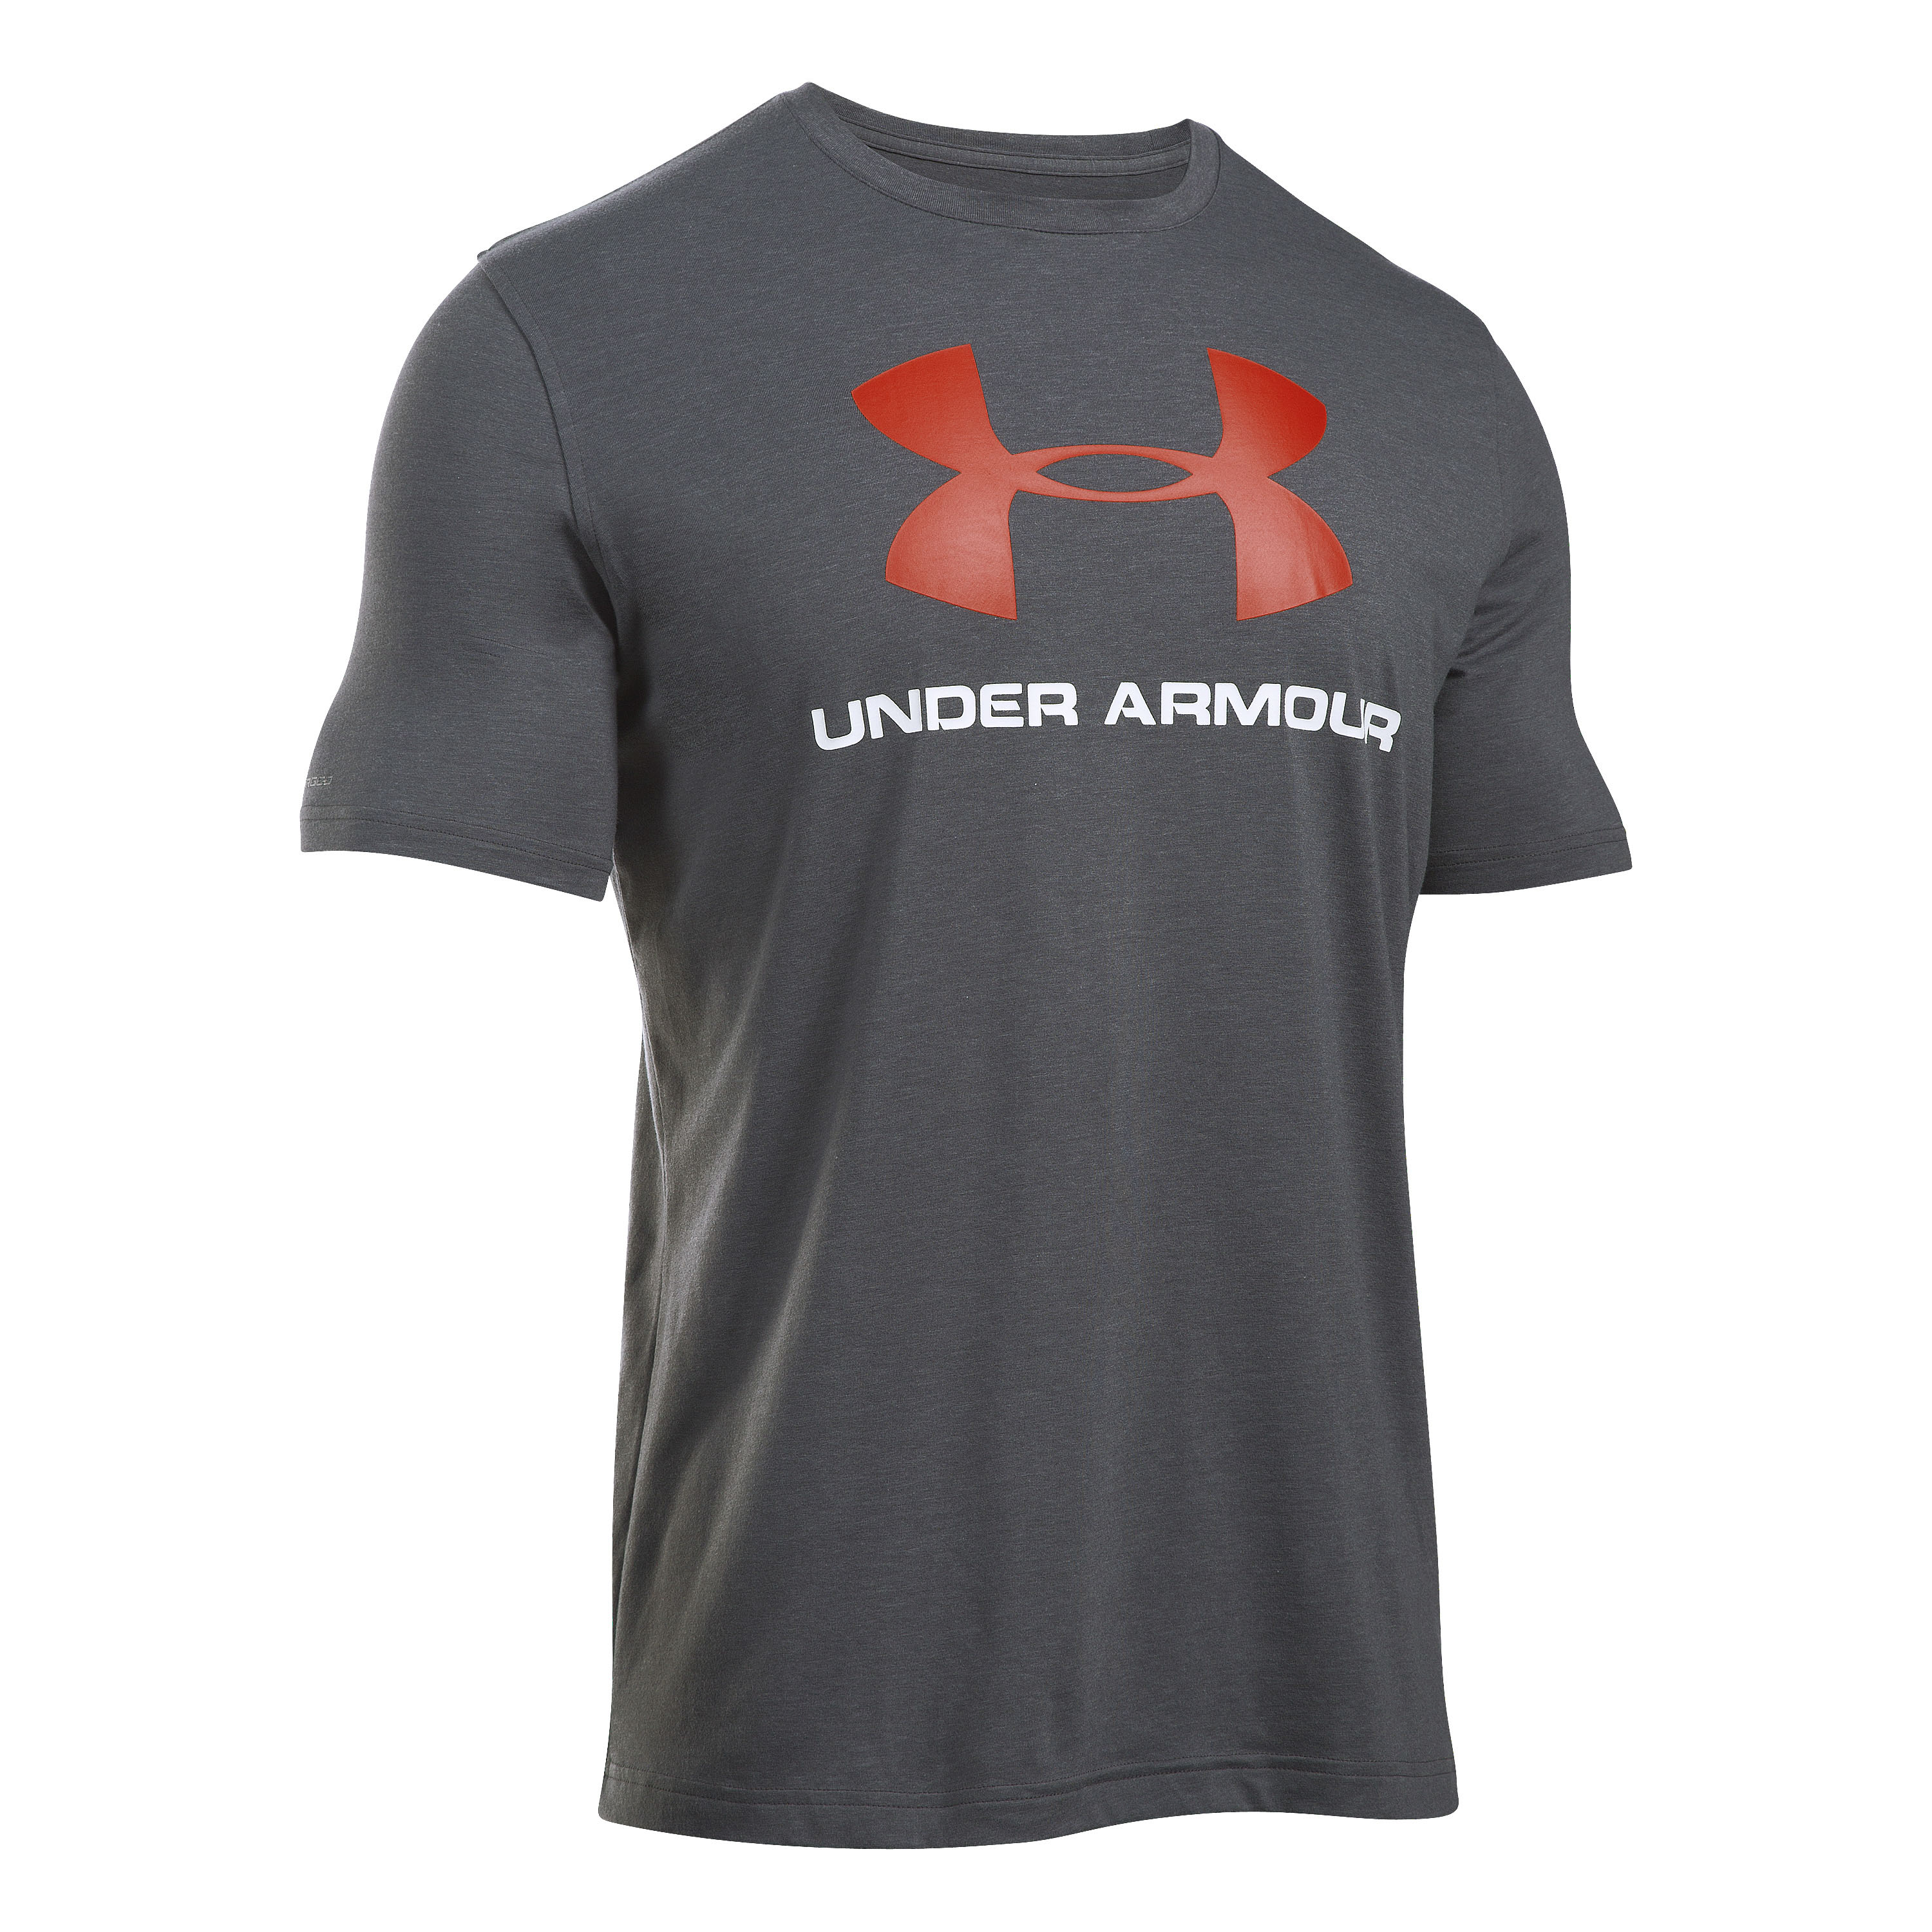 Adiccion profesional Infrarrojo Camiseta Under Armour Sportstyle Logo carbon